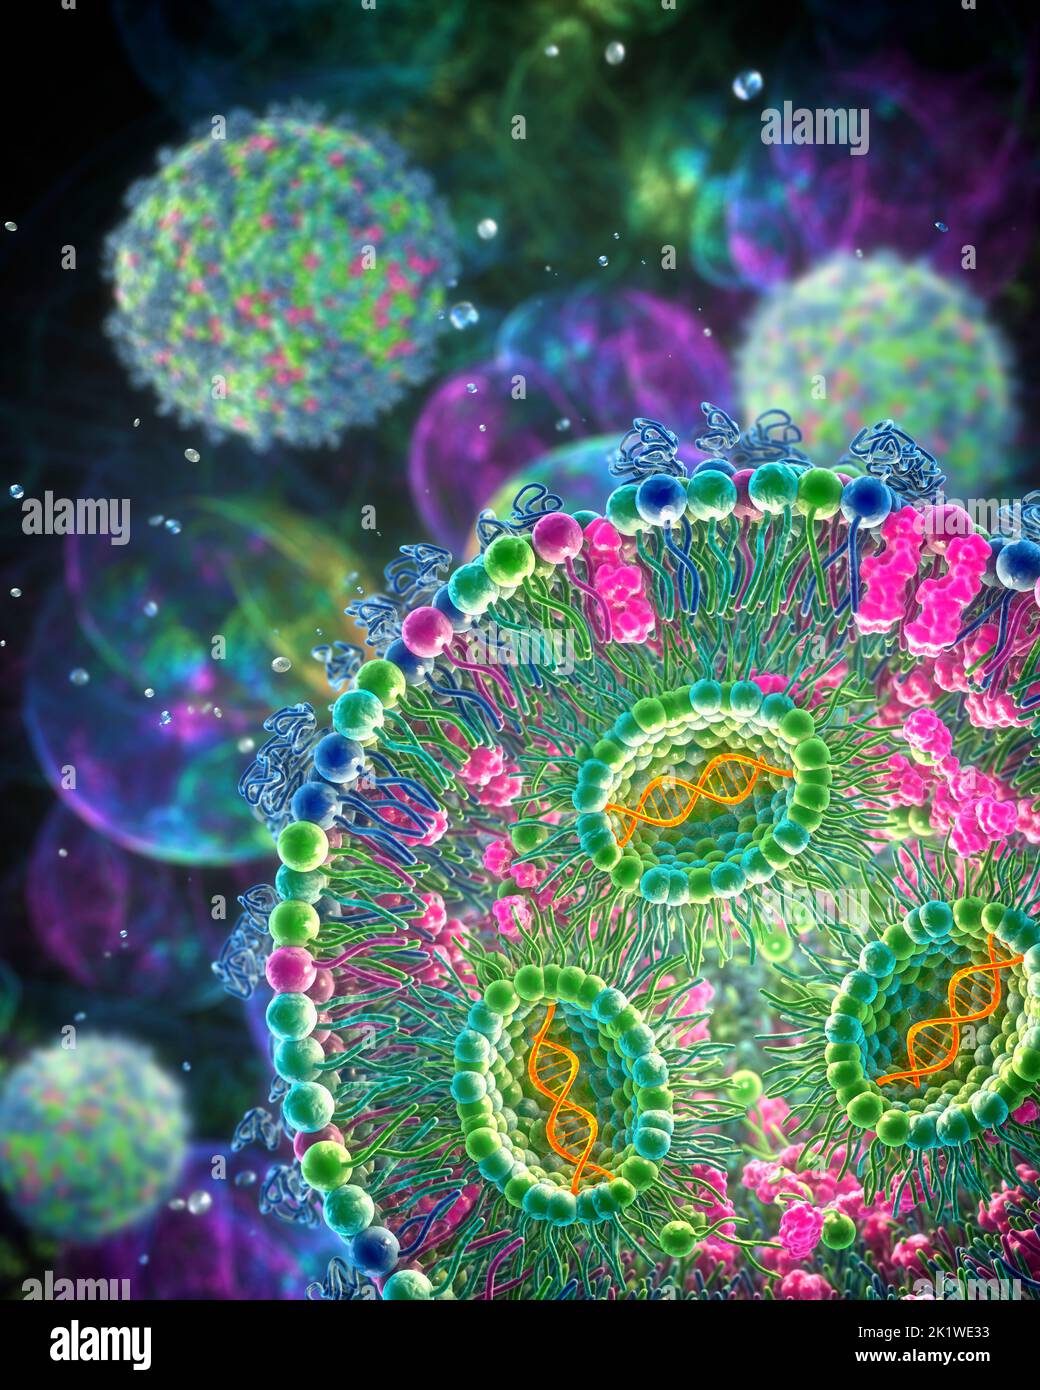 siRNA lipid nanoparticle antiviral, illustration Stock Photo